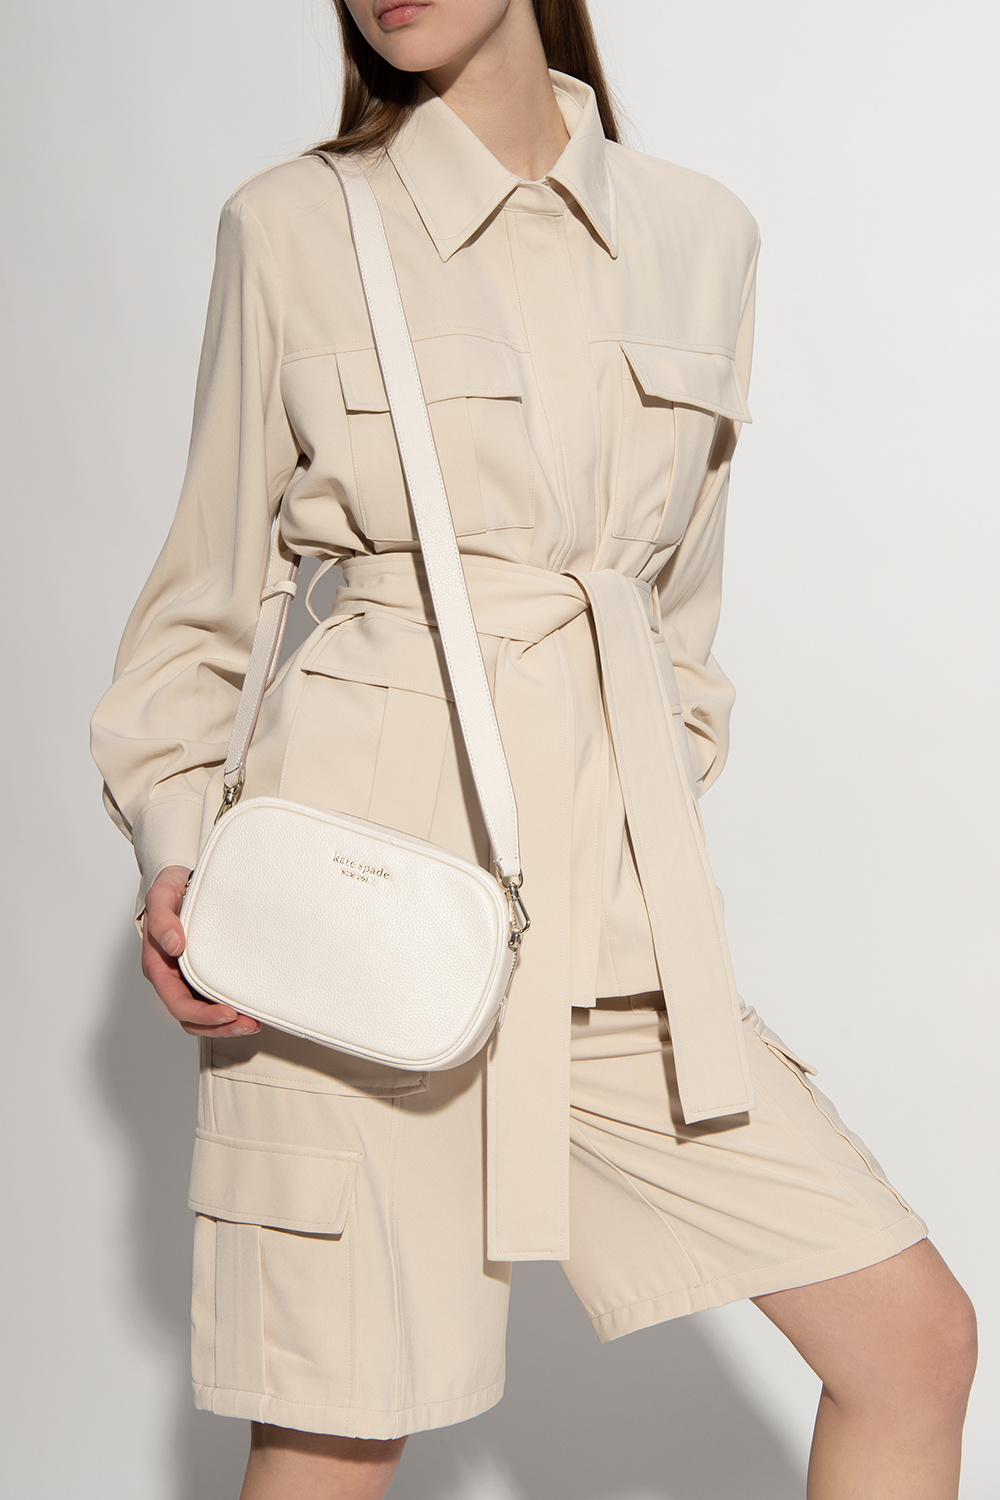 Kate Spade 'Astrid' shoulder bag | Women's Bags | Vitkac